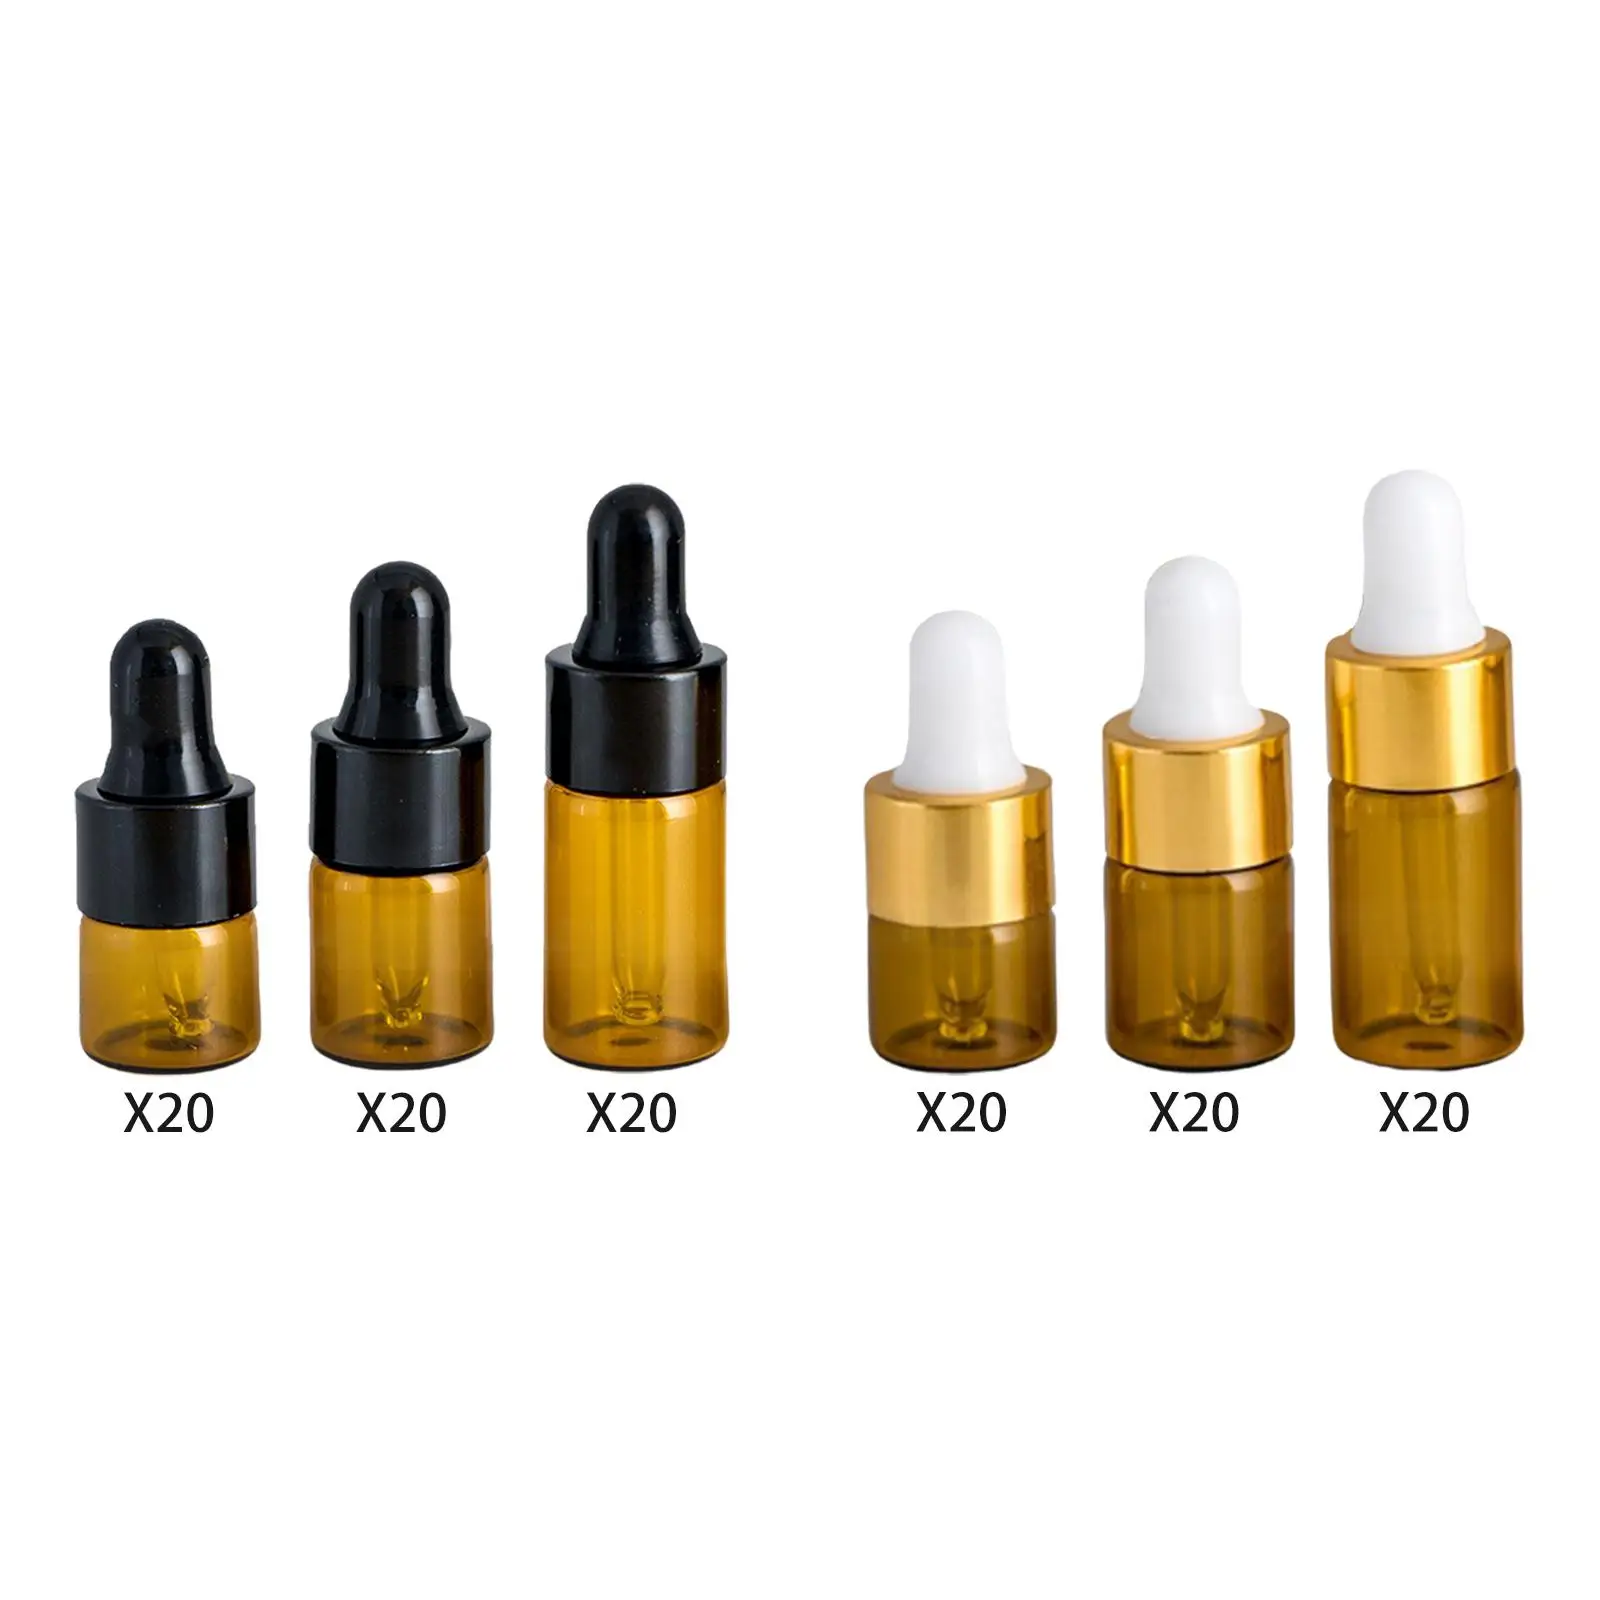 Mini Dropper Bottles with Glass Eye Dropper Refillable Sample Vial Empty Essential Oil Bottle for Essential Oils Body Oils